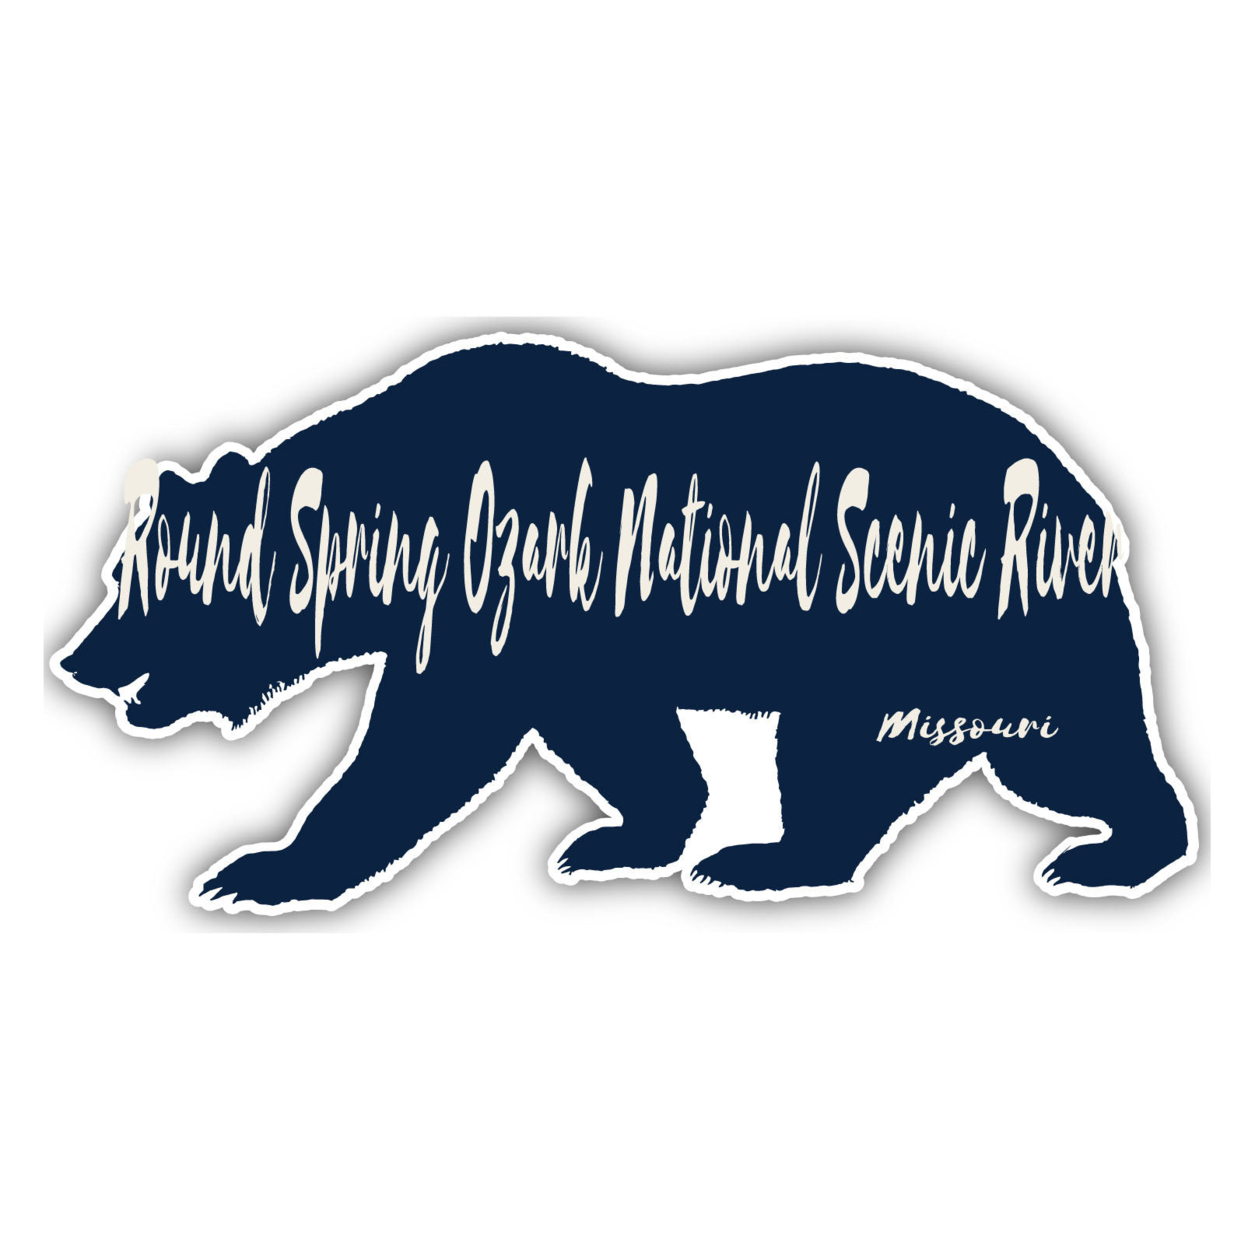 Round Spring Ozark National Scenic River Missouri Souvenir Decorative Stickers (Choose Theme And Size) - Single Unit, 4-Inch, Bear